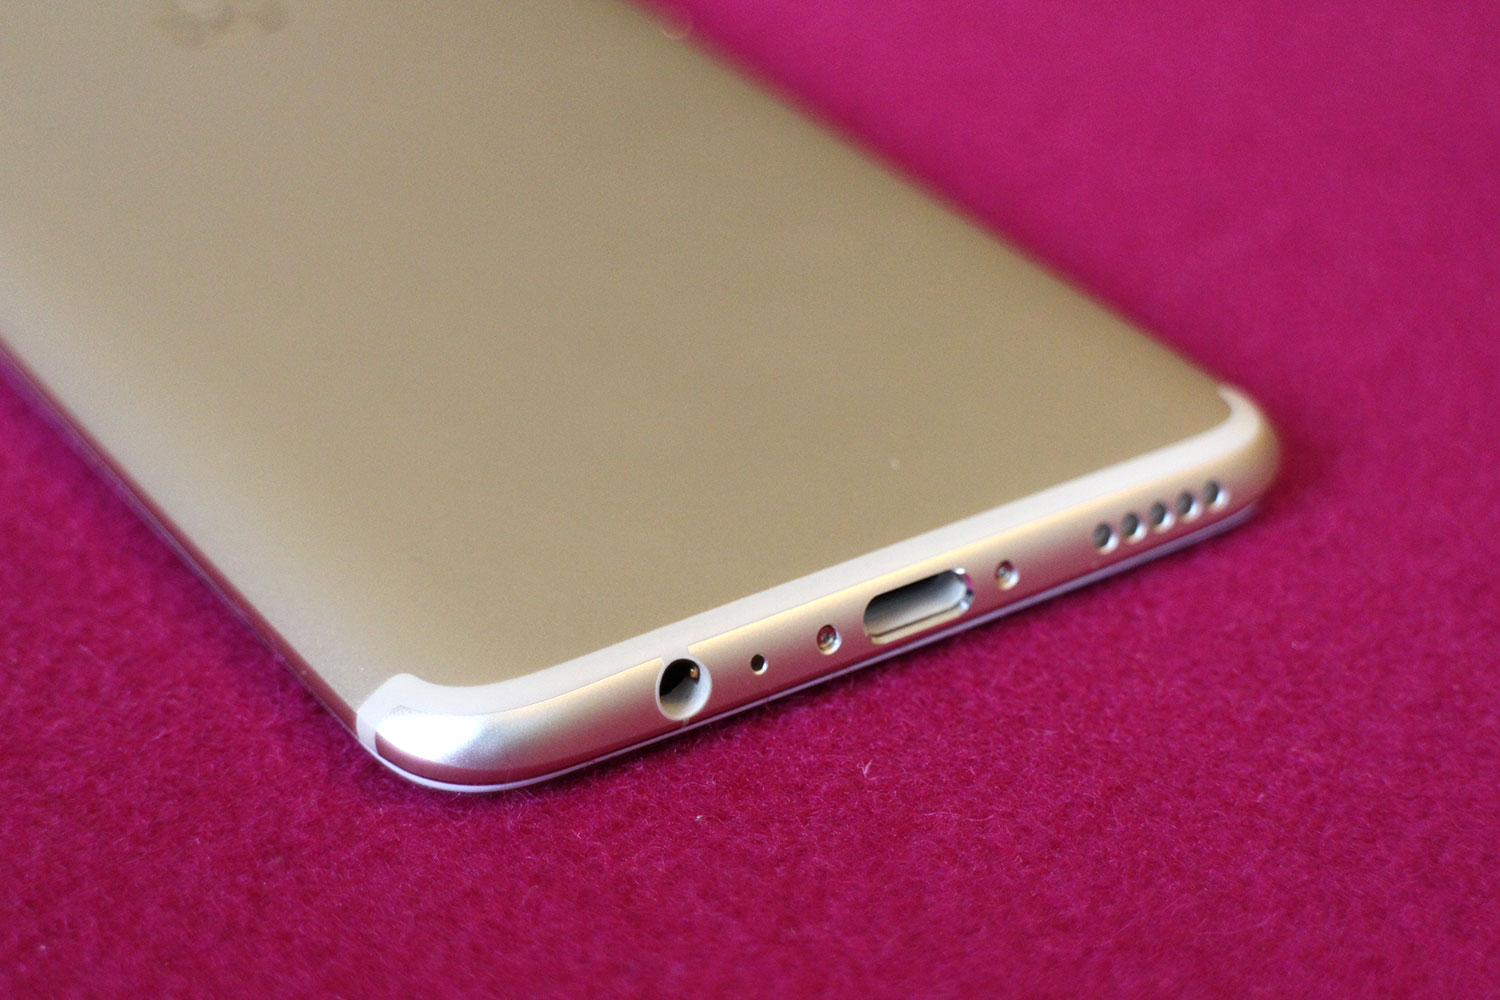 OnePlus 5 soft gold